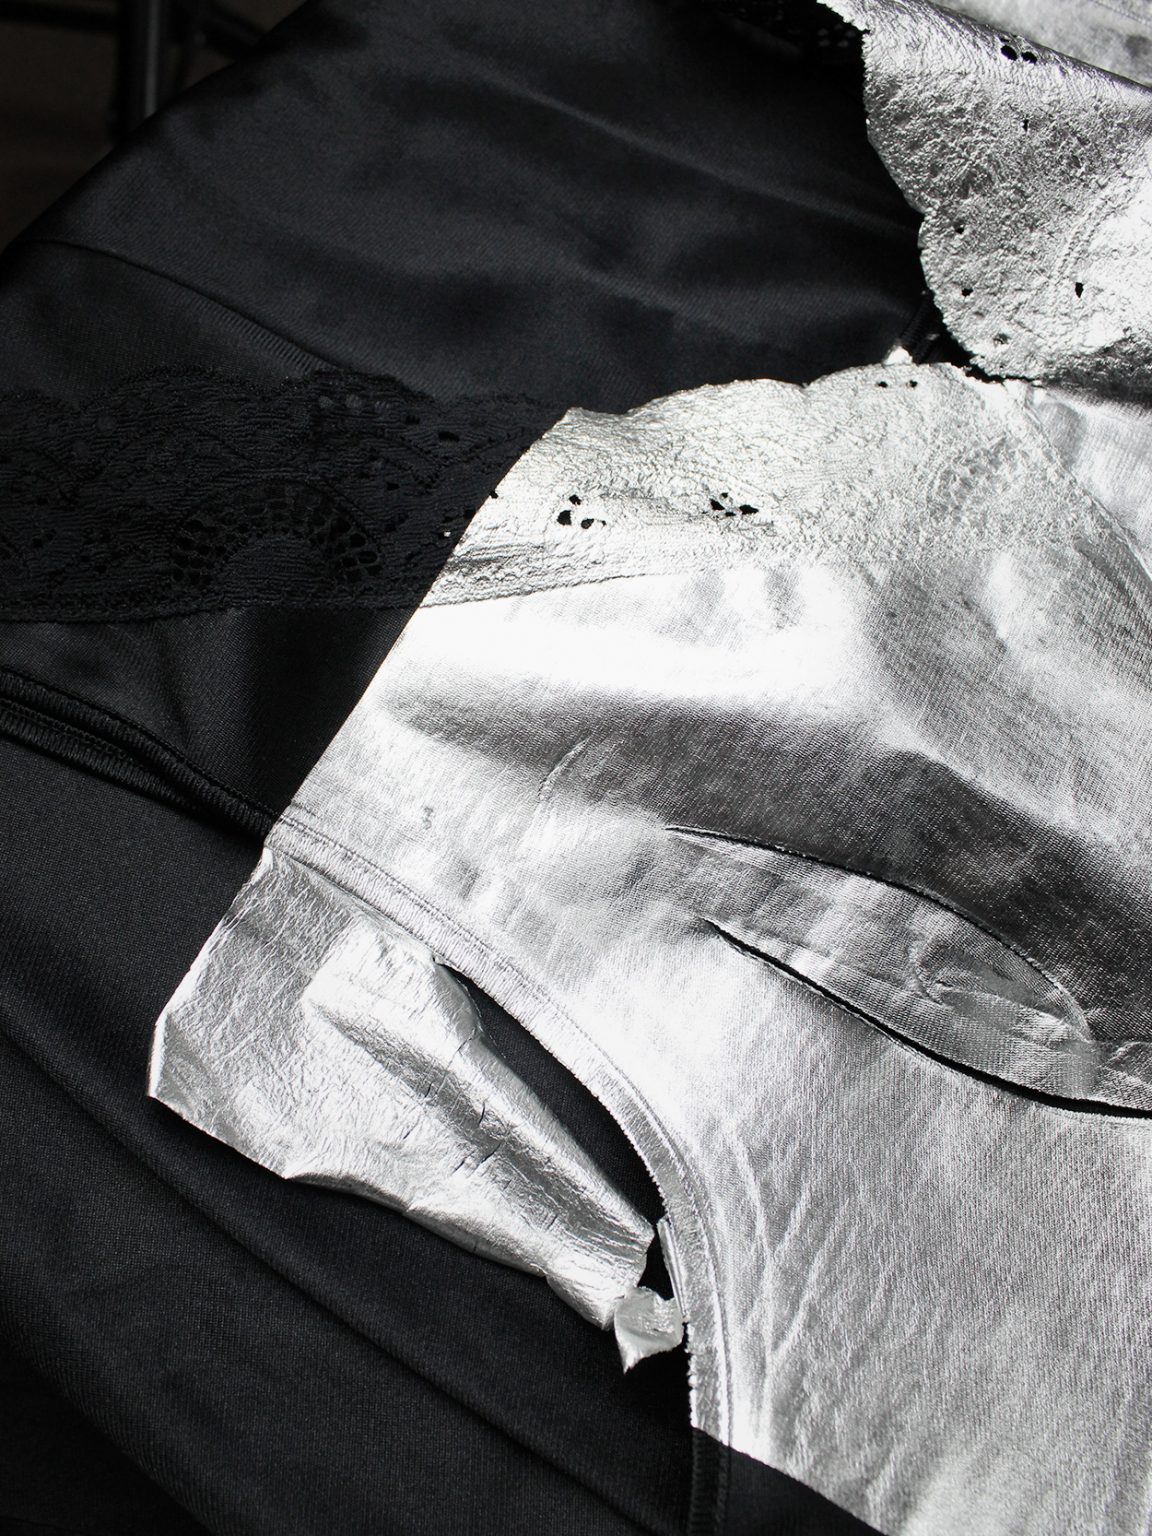 Maison Martin Margiela artisanal black lace dress with pressed silver foil — spring 2003